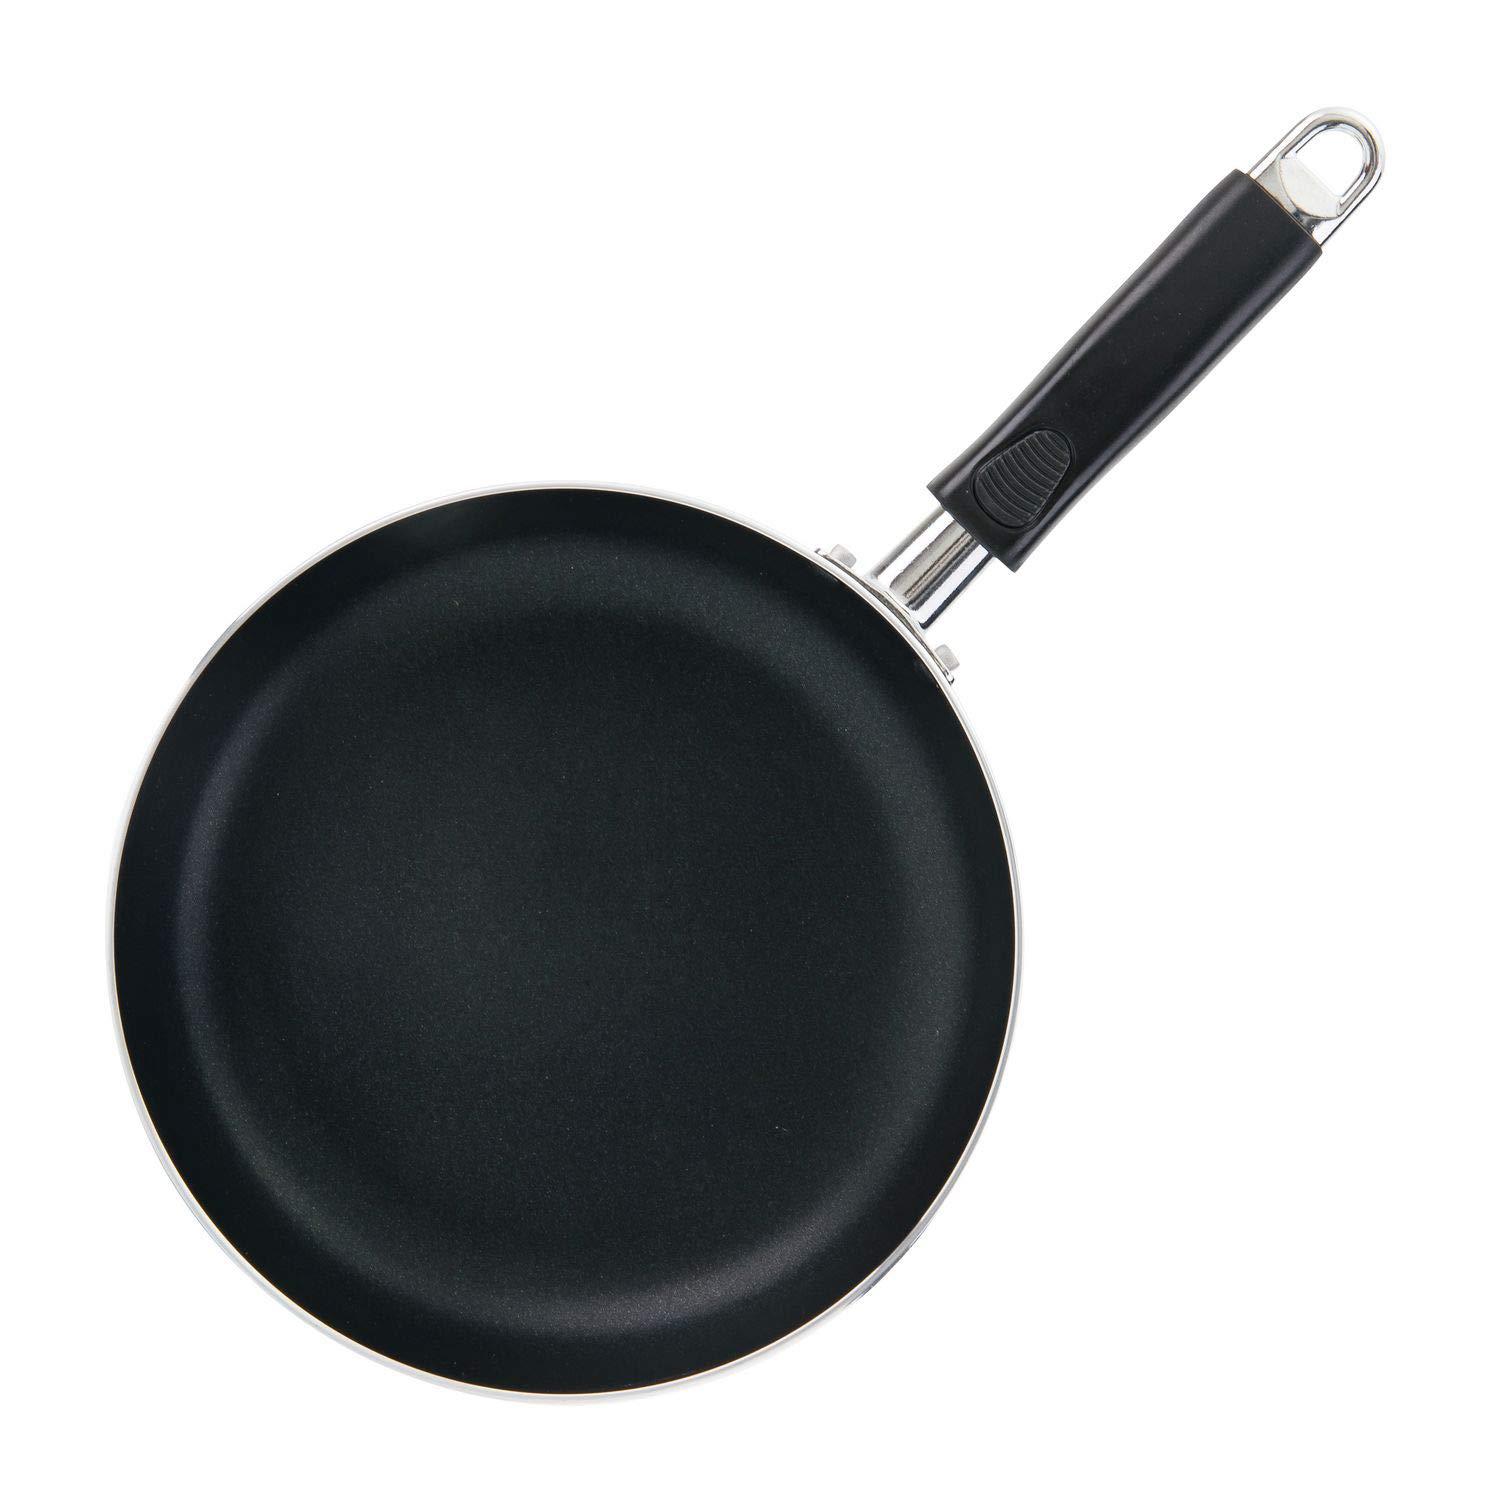 alpine cuisine aluminum cookware set 7 pc set, nonstick coating saucepan dutch oven wok pan fry pan with riveted fixed handle